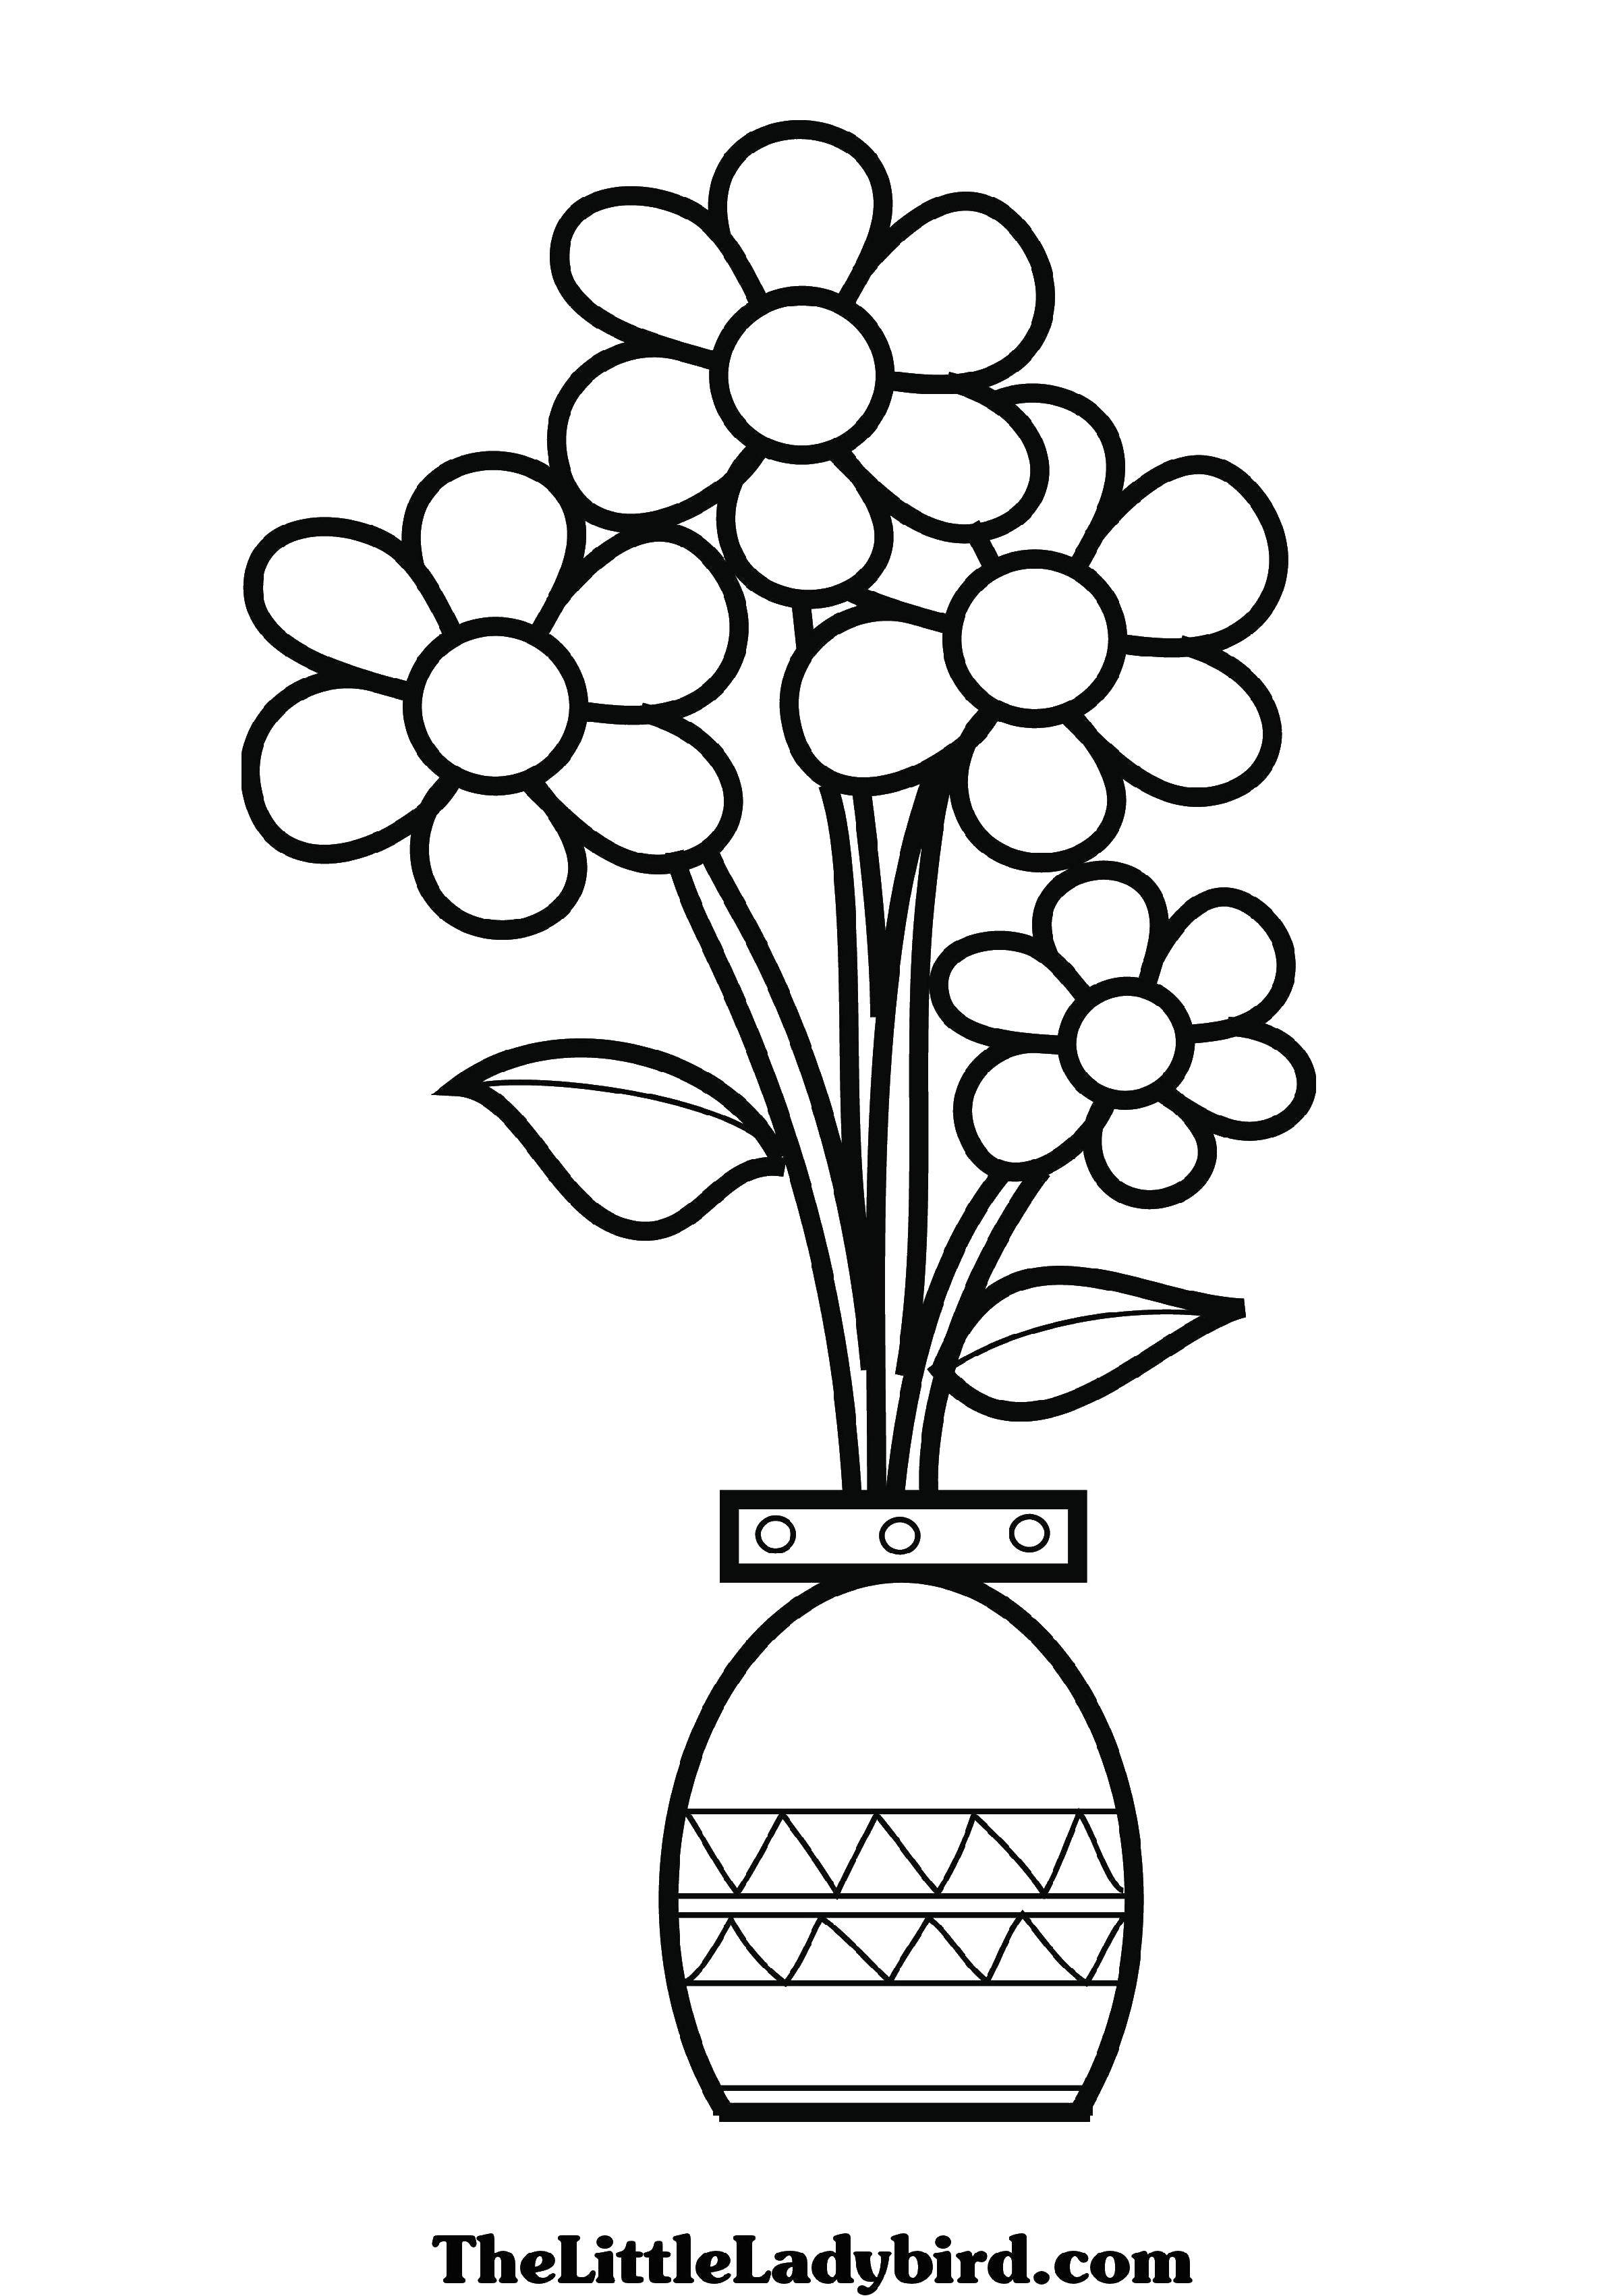 Название: Раскраска Милашки цветы. Категория: Ваза. Теги: Цветы, букет, ваза.